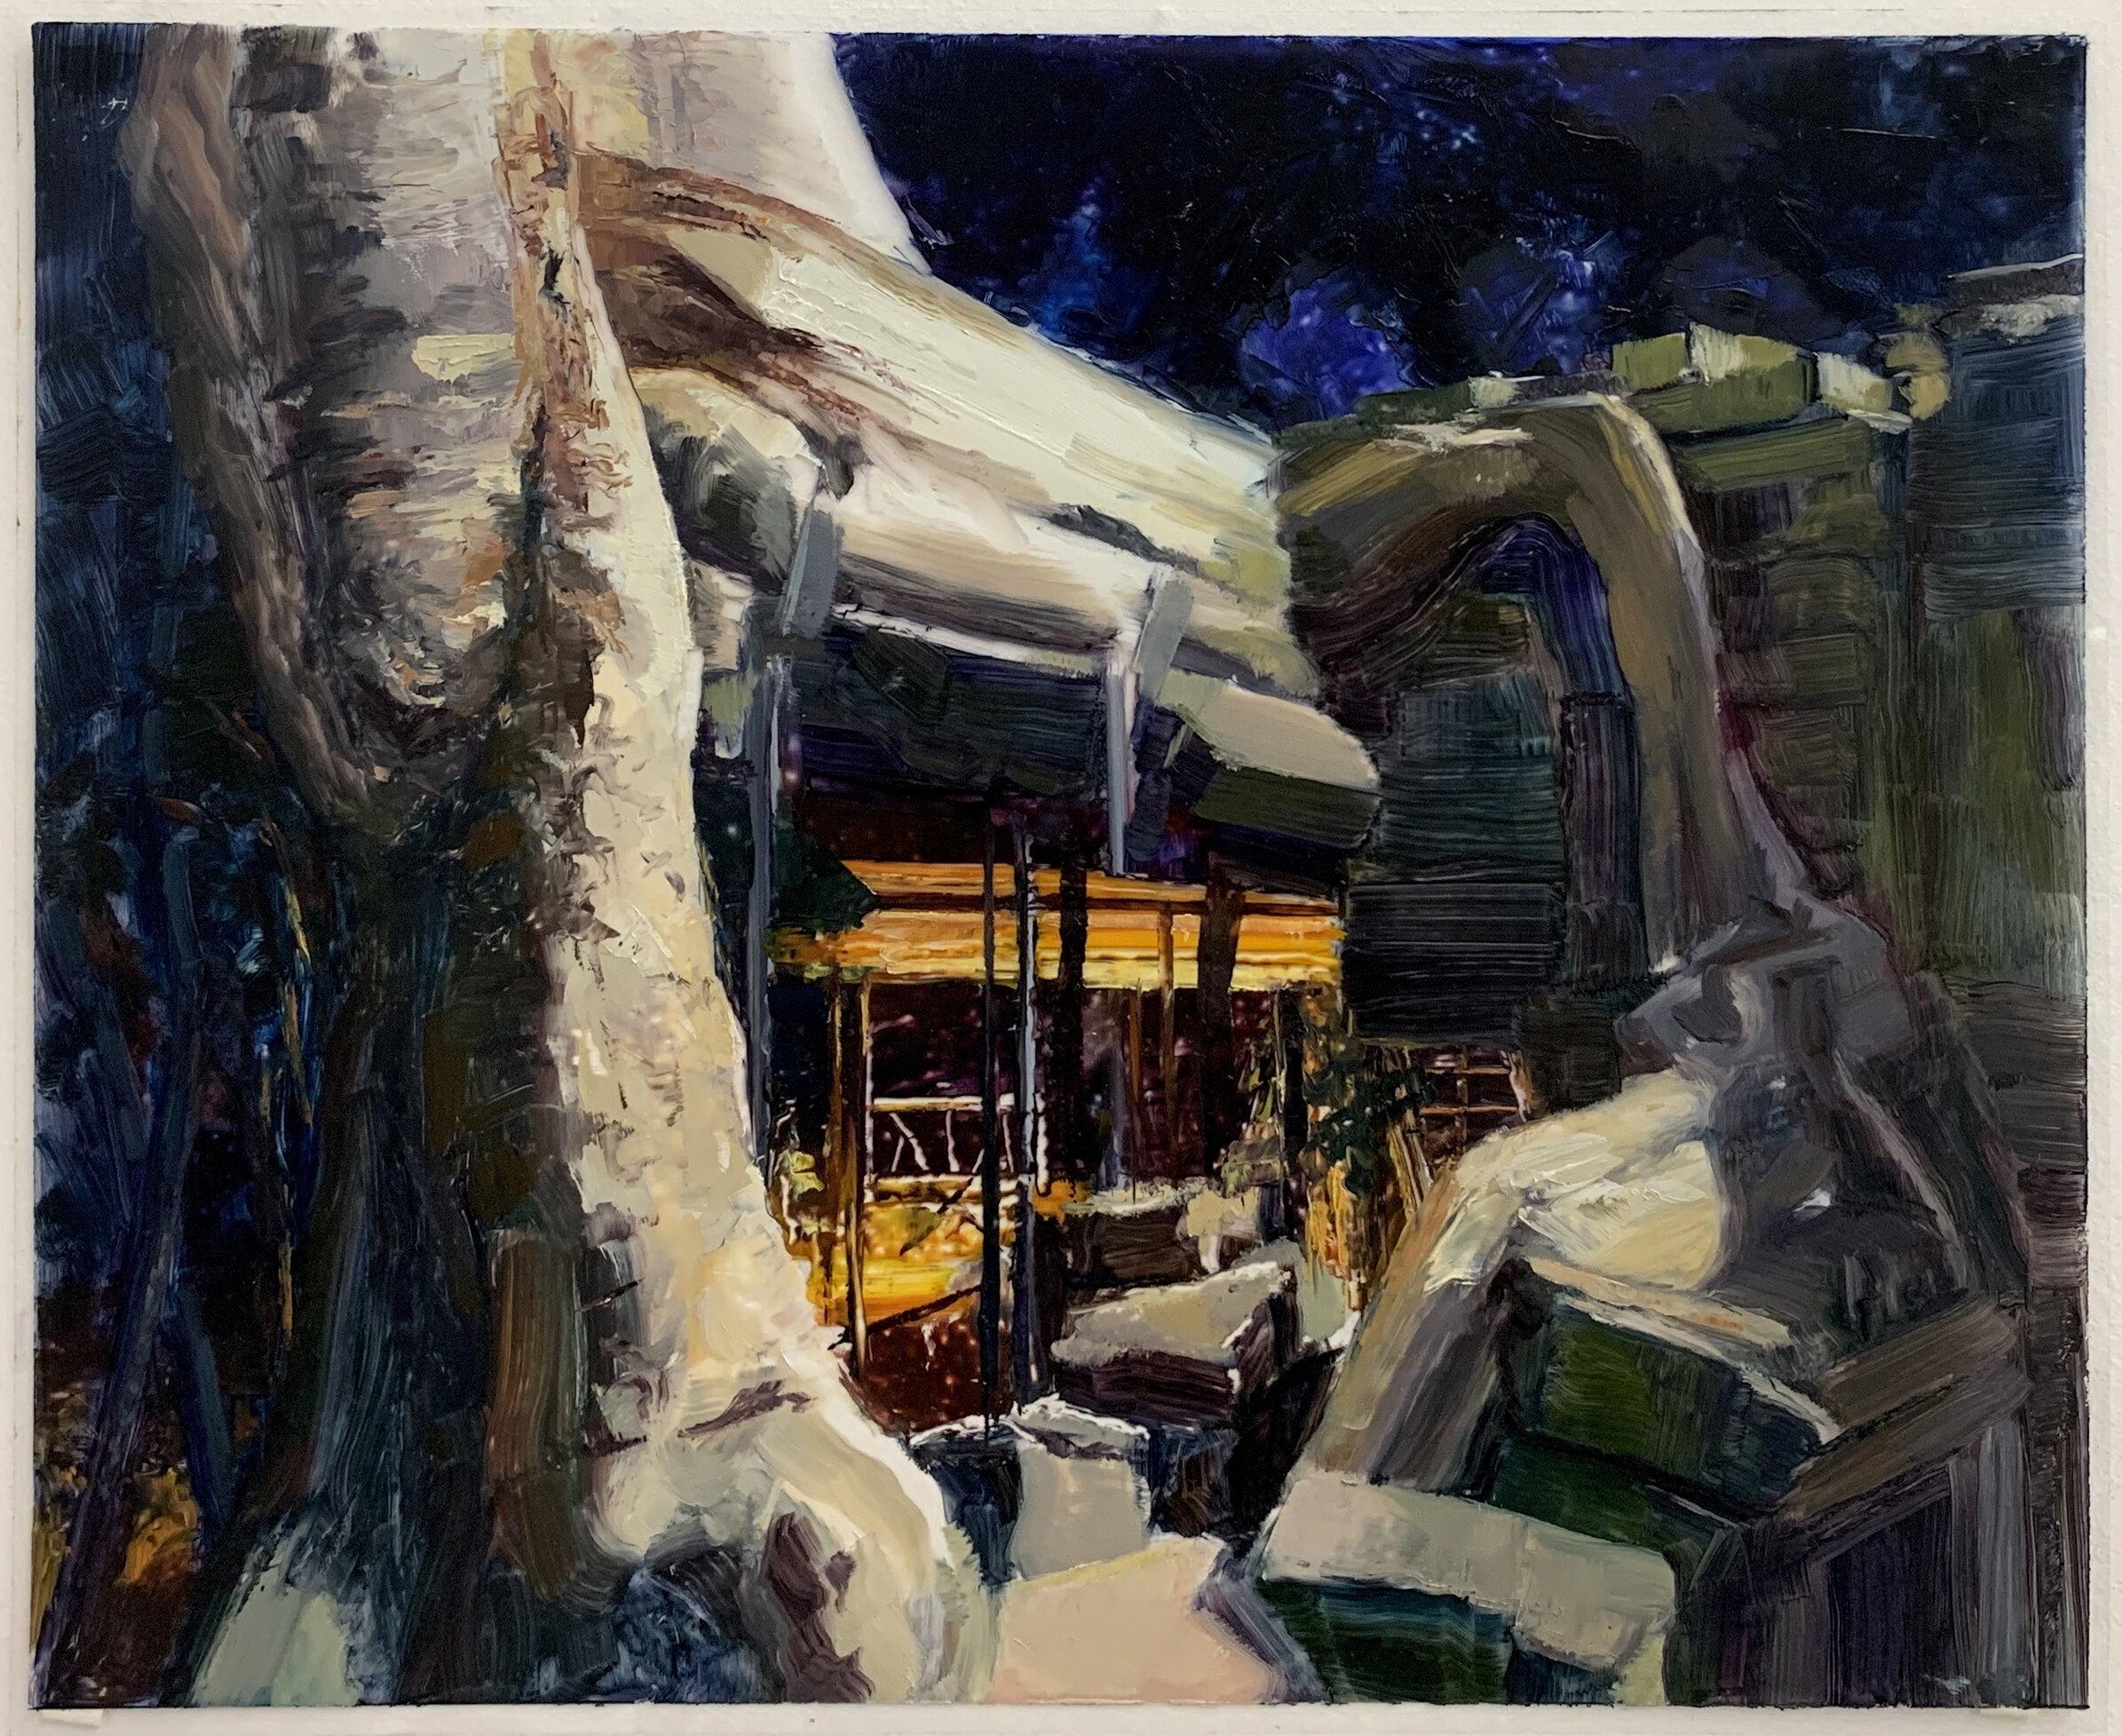   Night Treehouse,  2019 Oil on dura-lar, 12 x 14 in 